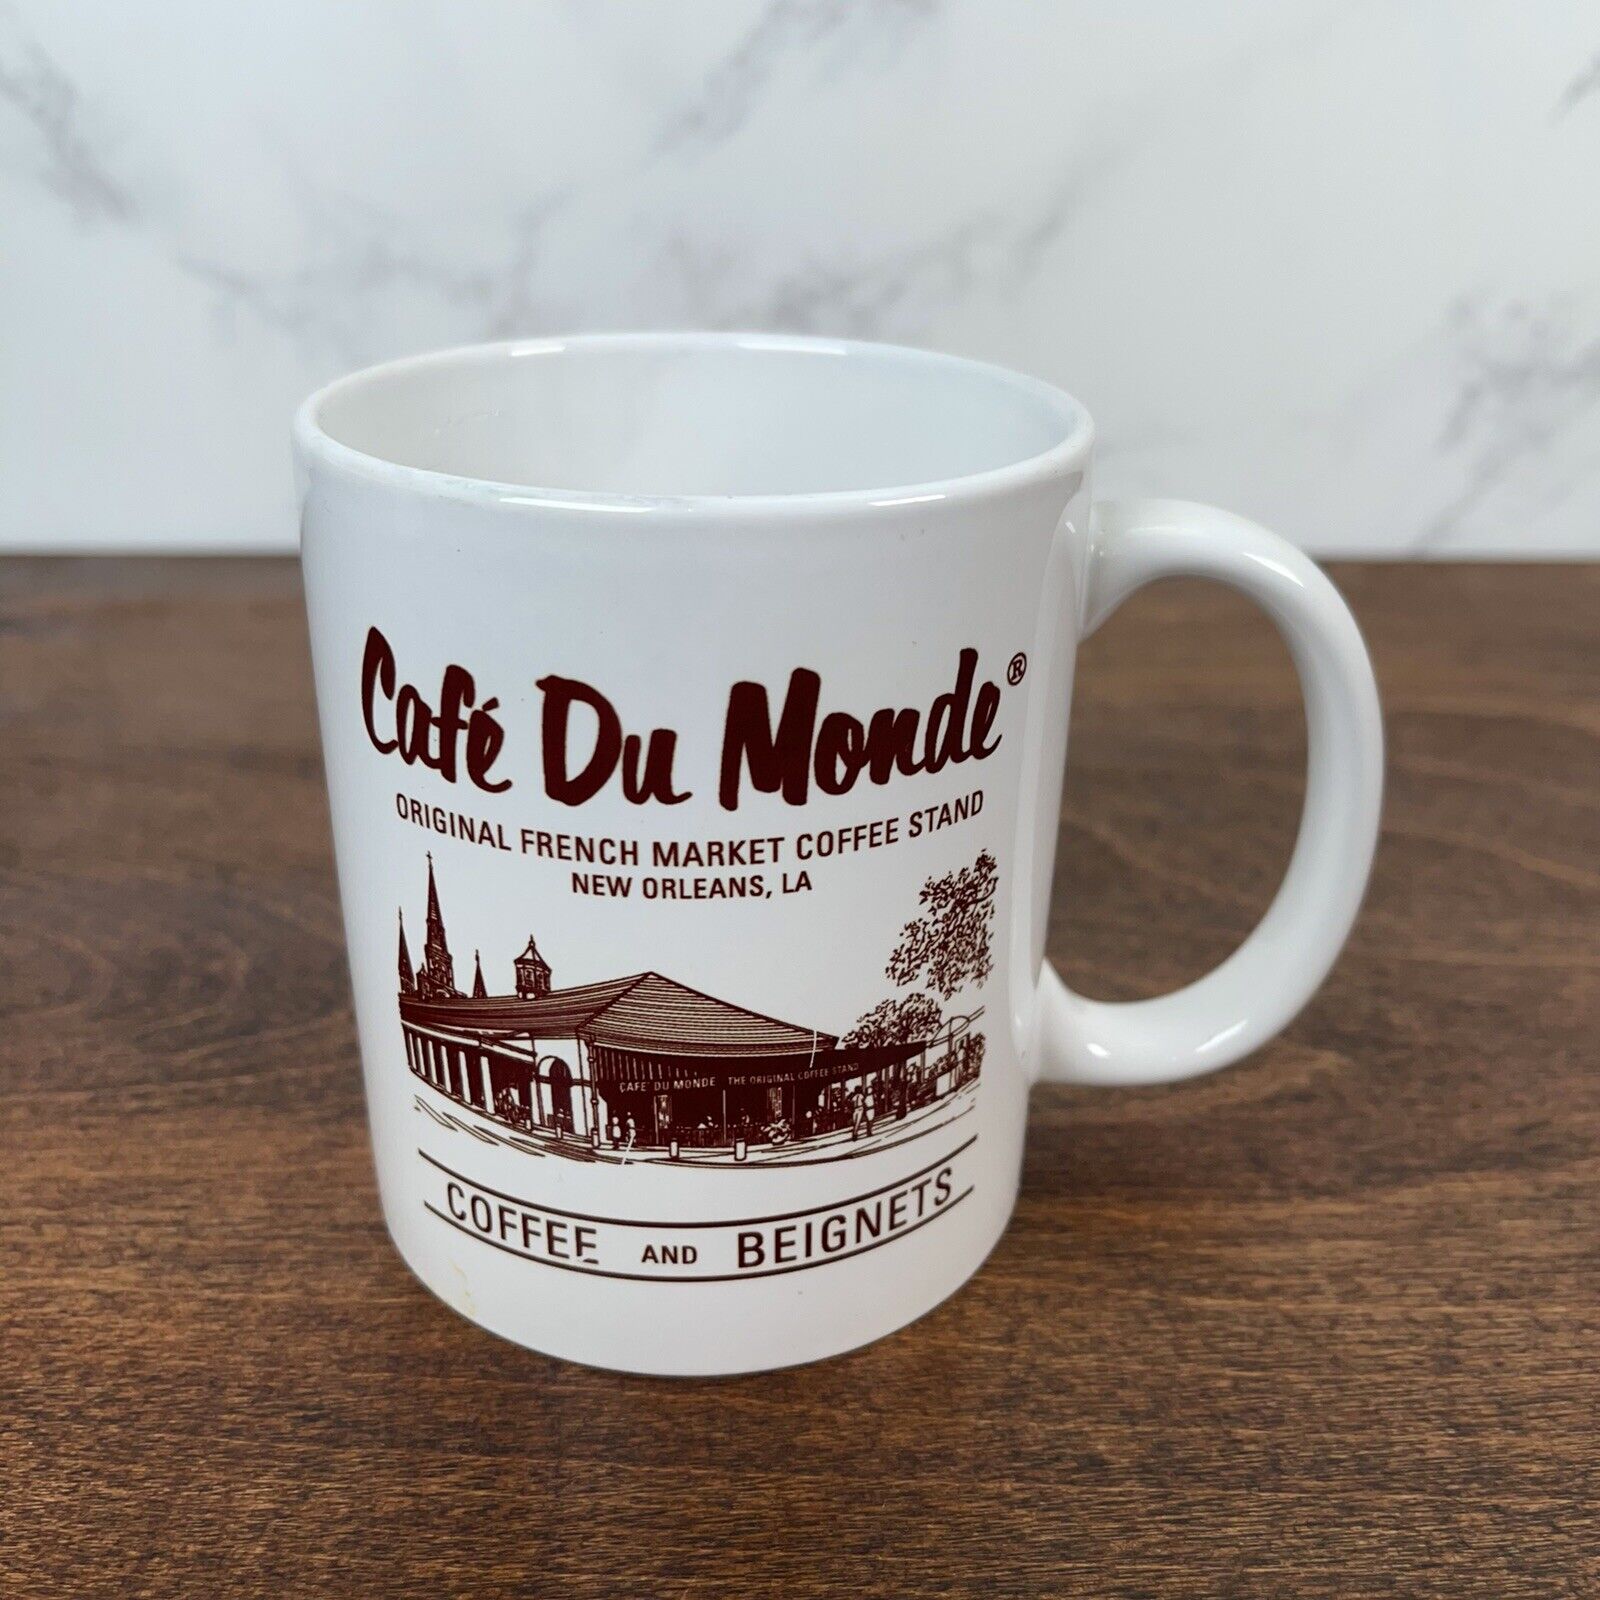 Cafe Du Monde-Original French Market Coffee Stand- N Orleans,LA- mug/cup